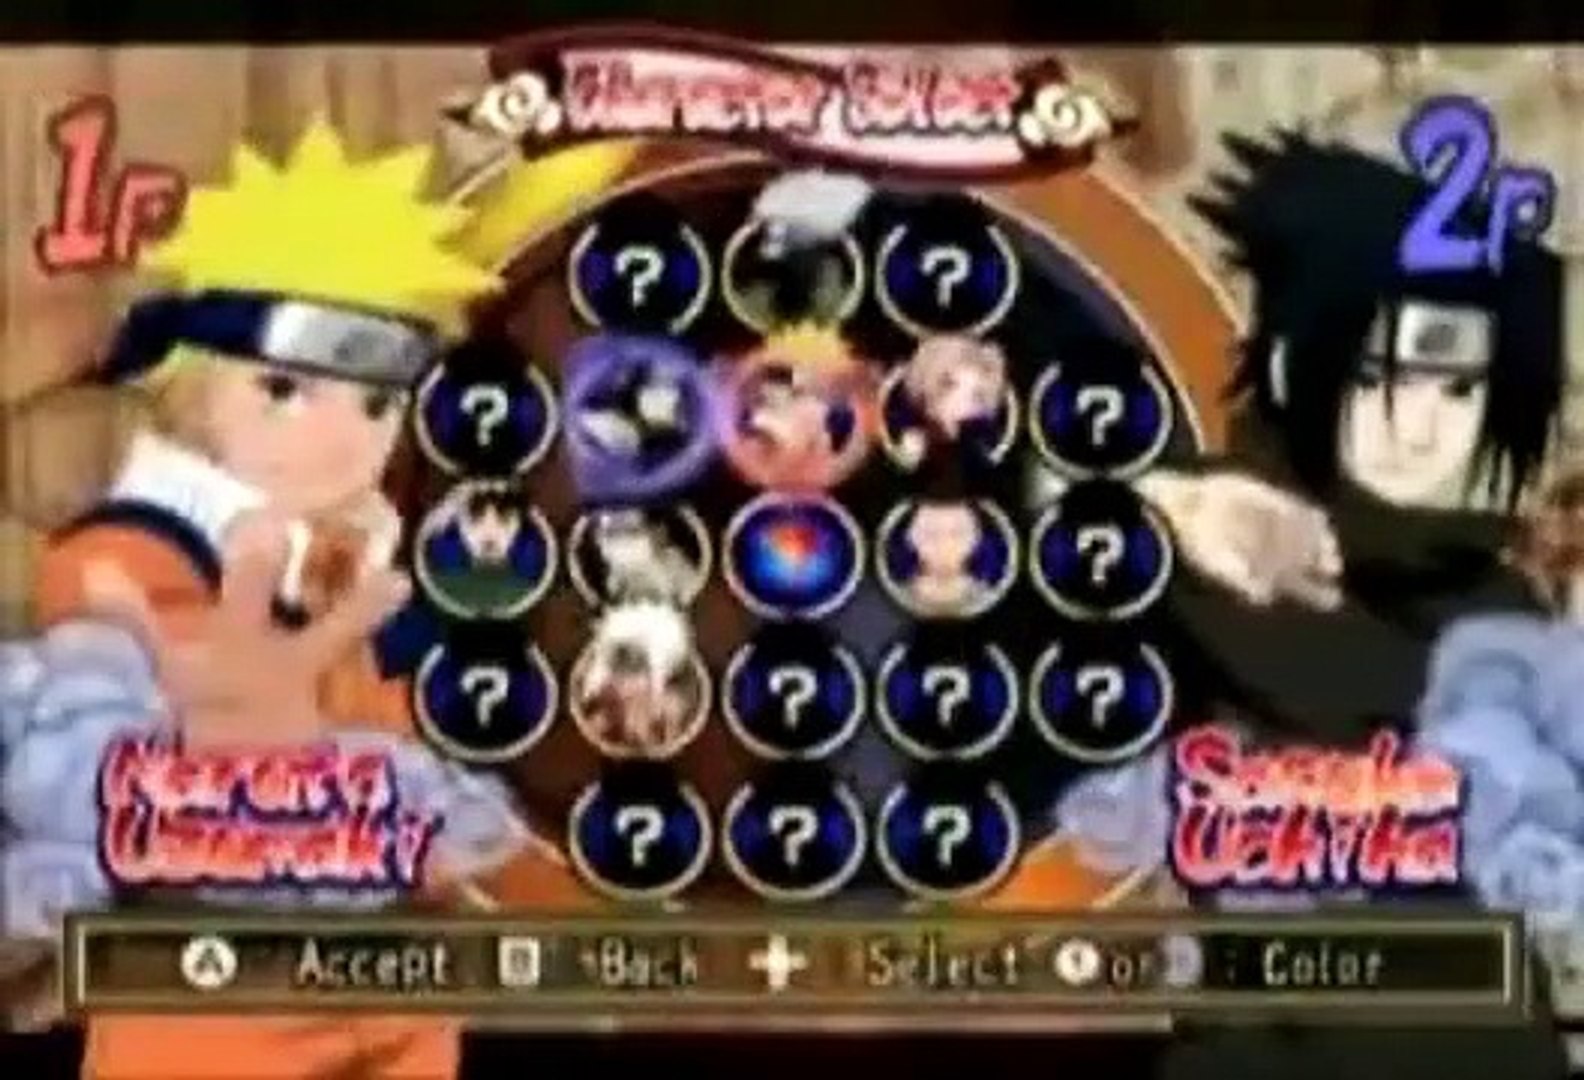 Naruto: Clash Of Ninja Revolution 2 - Nintendo Wii